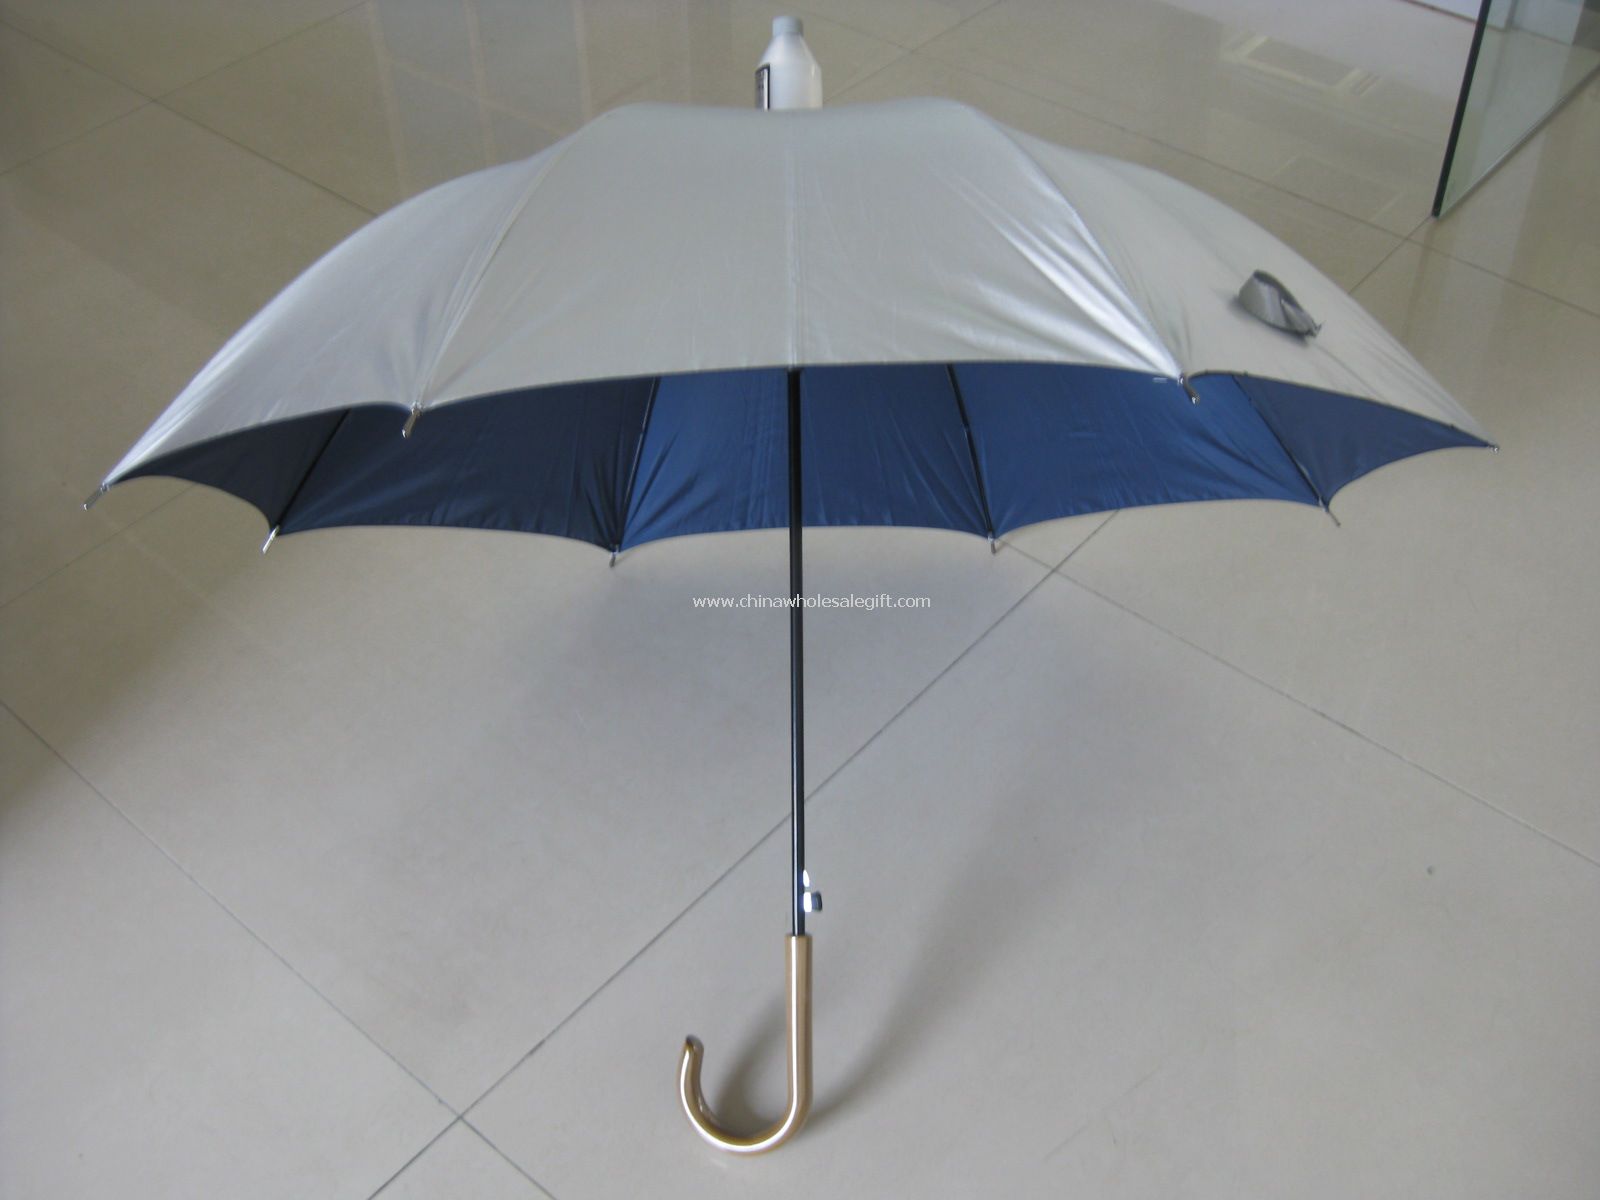 Guarda-chuva com caixa à prova de água